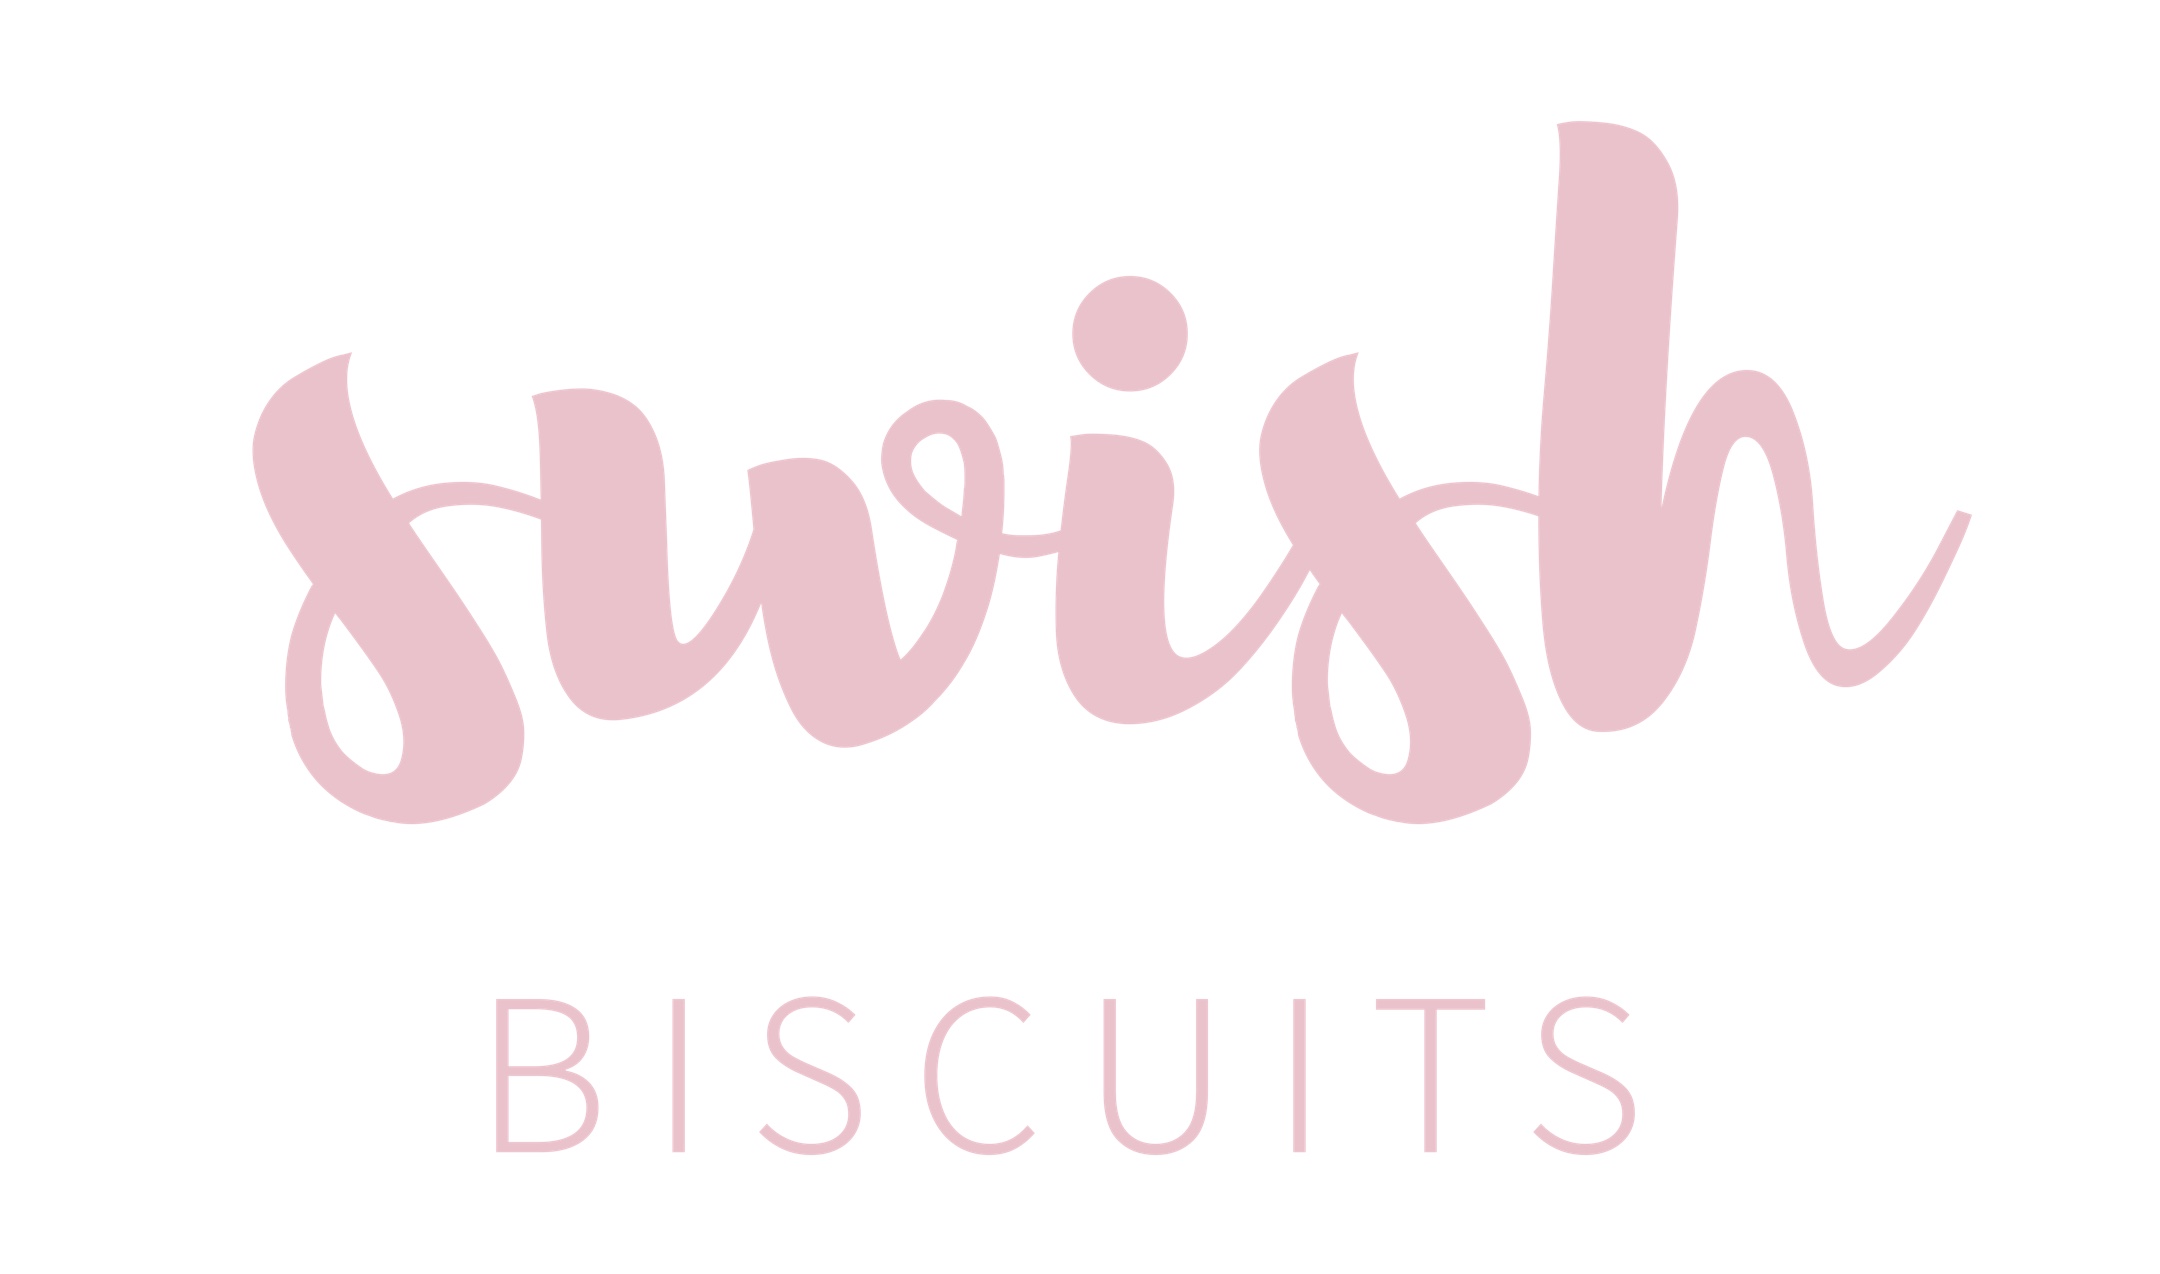 Swish Biscuits